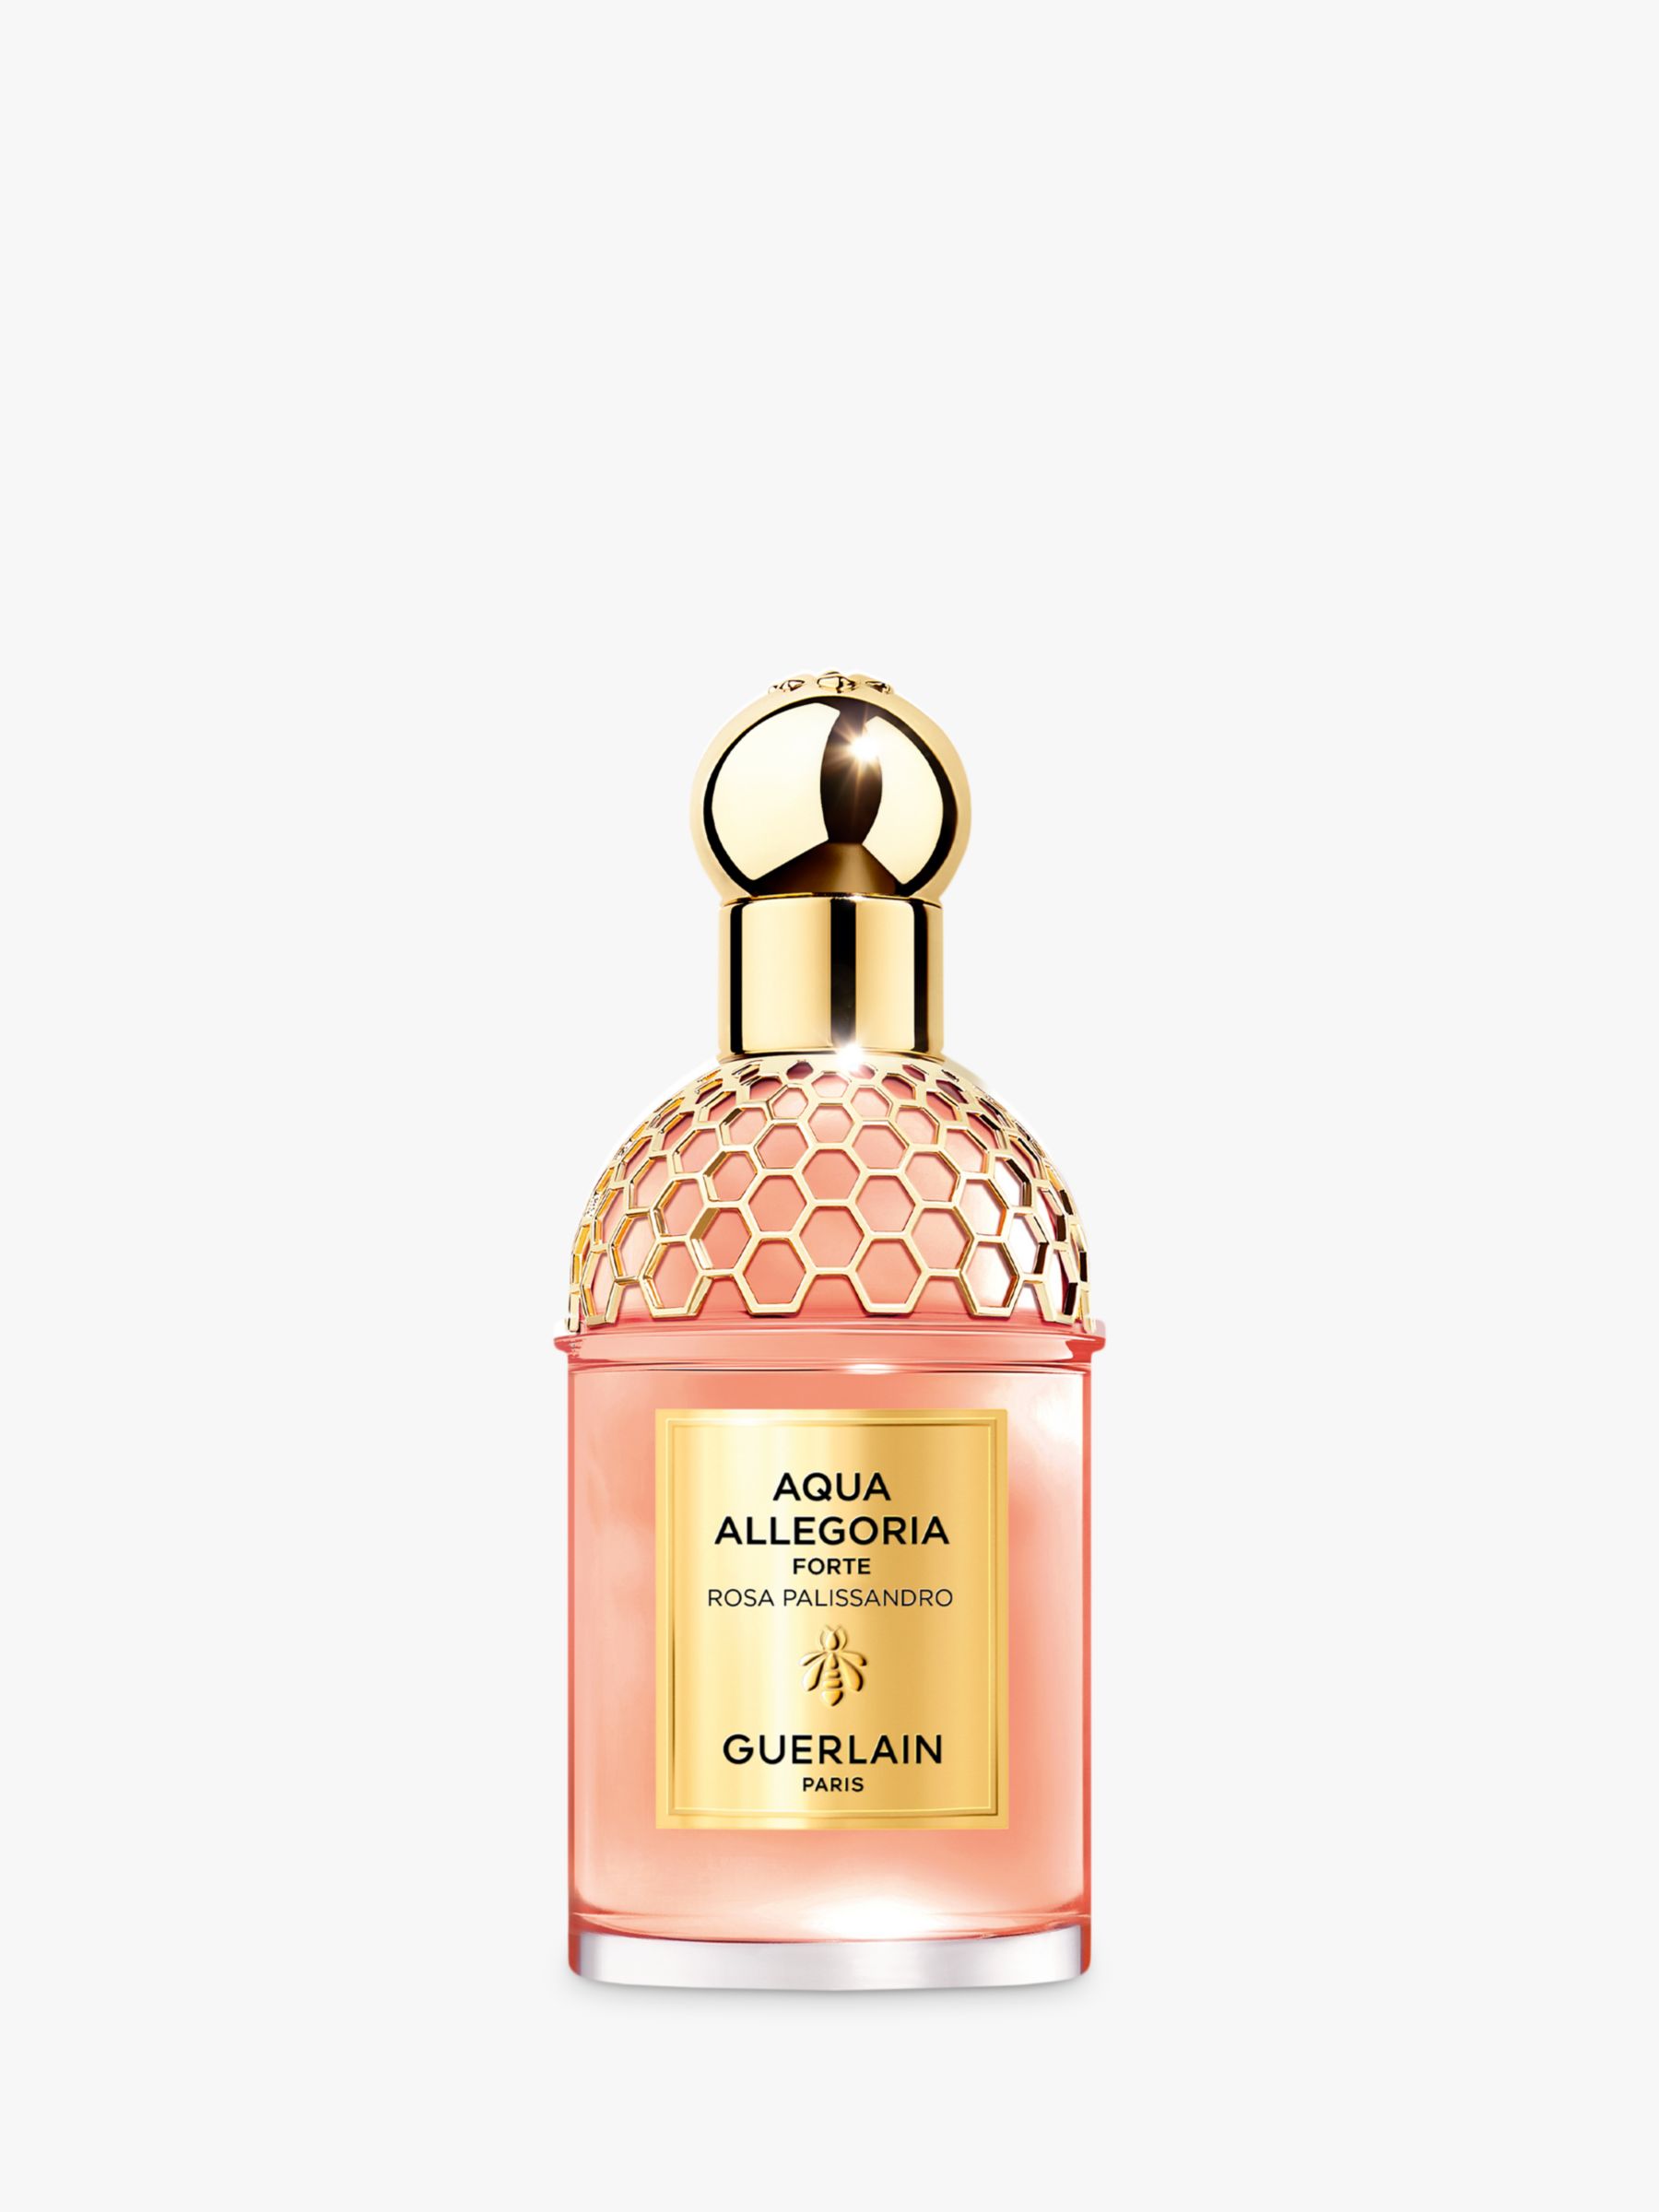 Guerlain Aqua Allegoria Forte Rosa Palissandro Eau de Parfum, 75ml 1